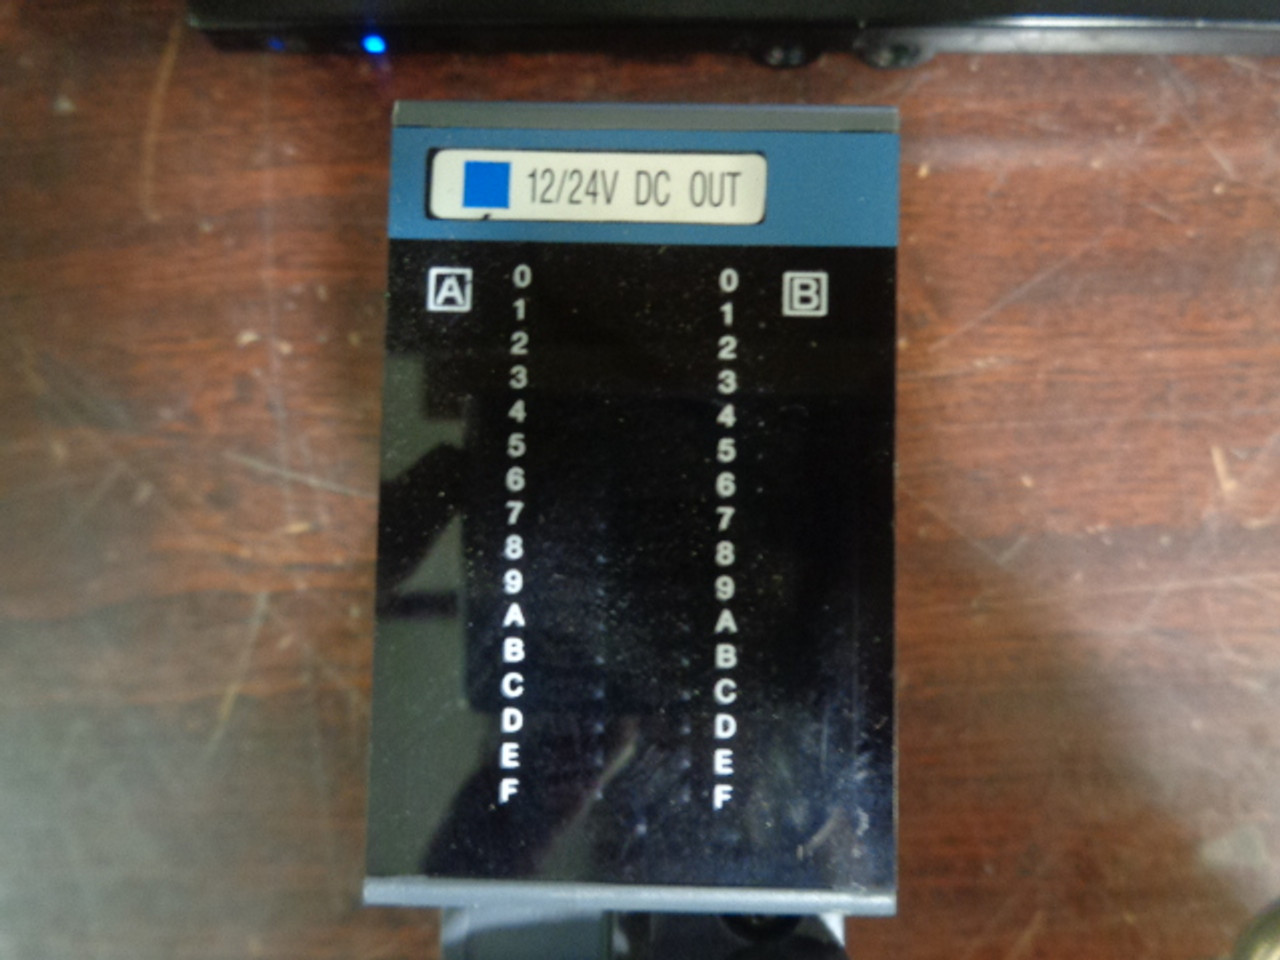 Yamatake - Honeywell MX100PT12 32Pt Transistor Out Unit, Serial #: 080211